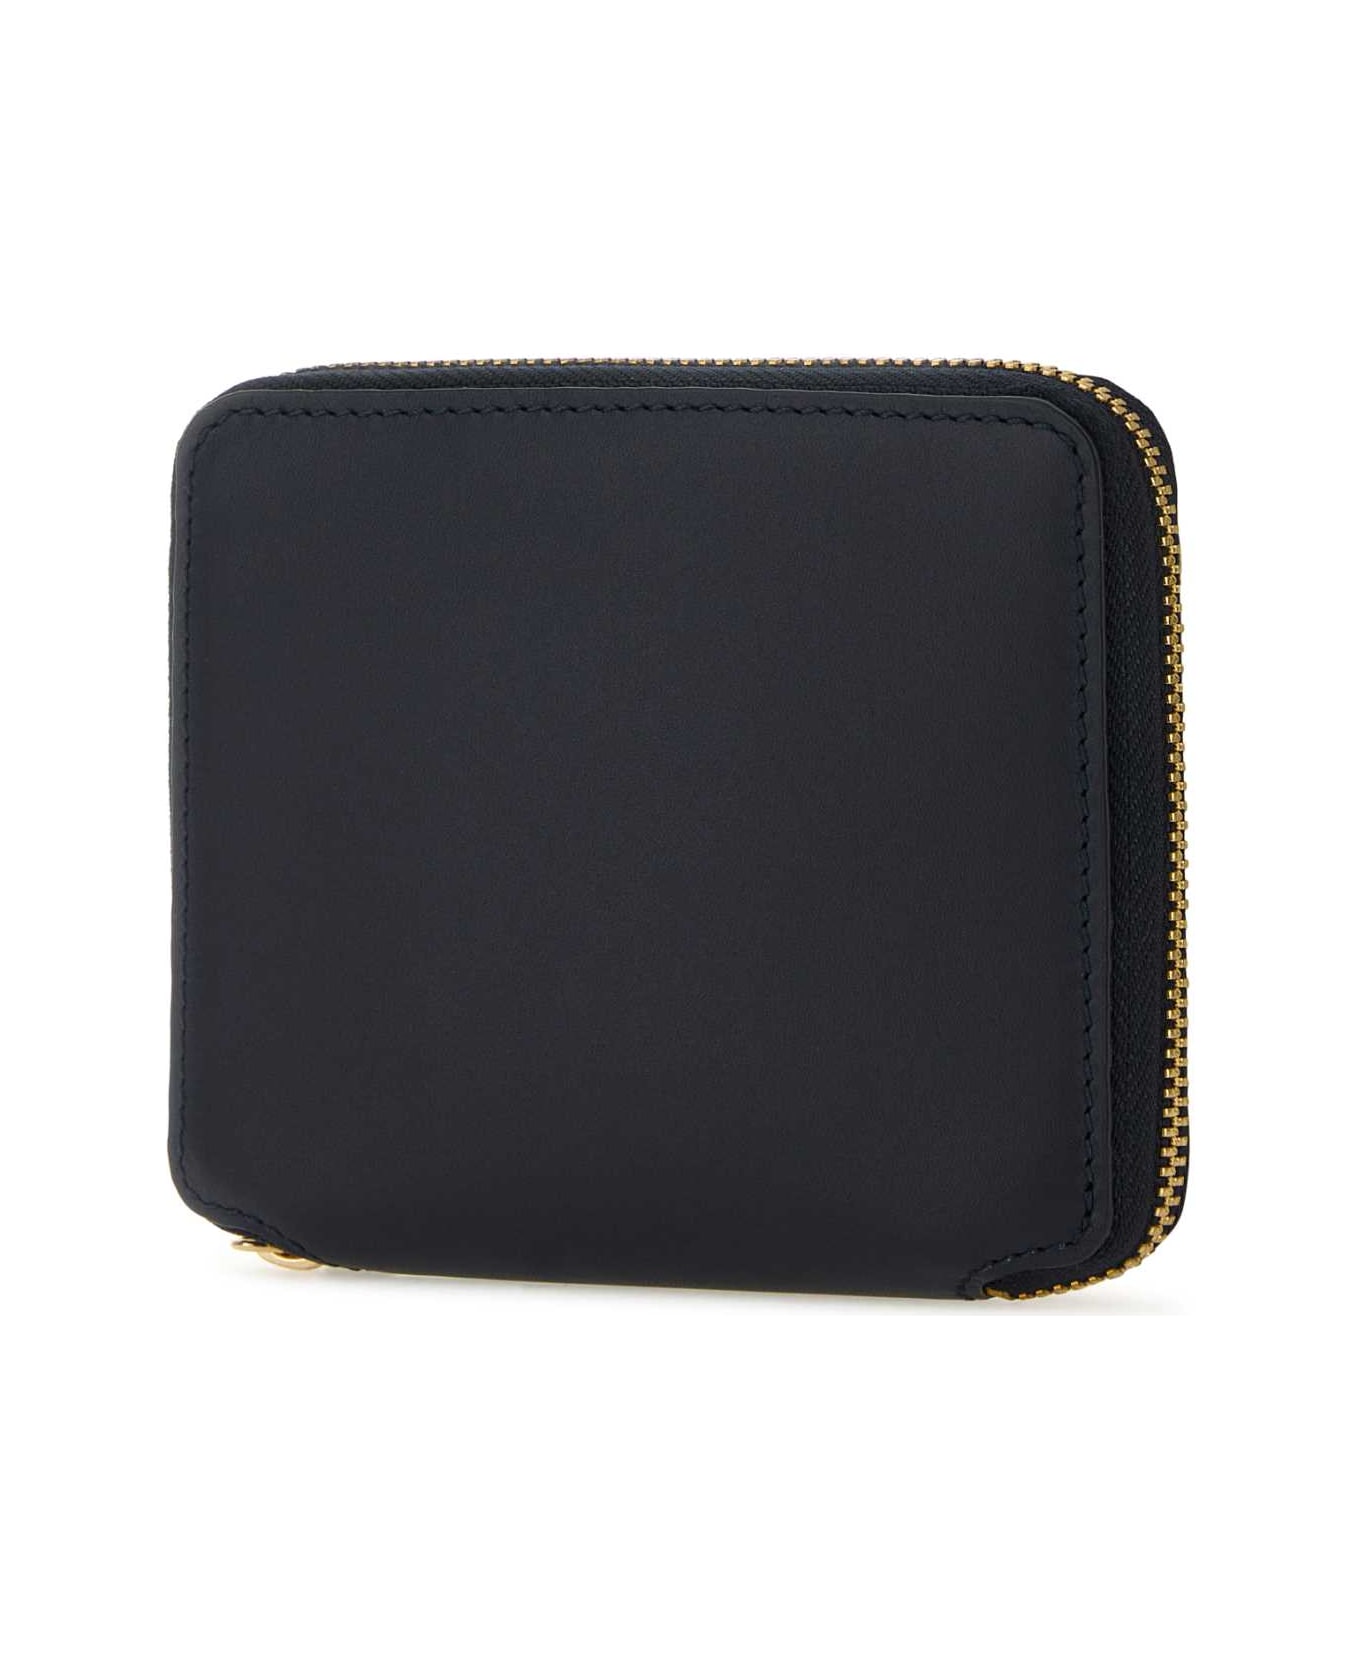 Comme des Garçons Midnight Blue Leather Wallet - NAVY 財布